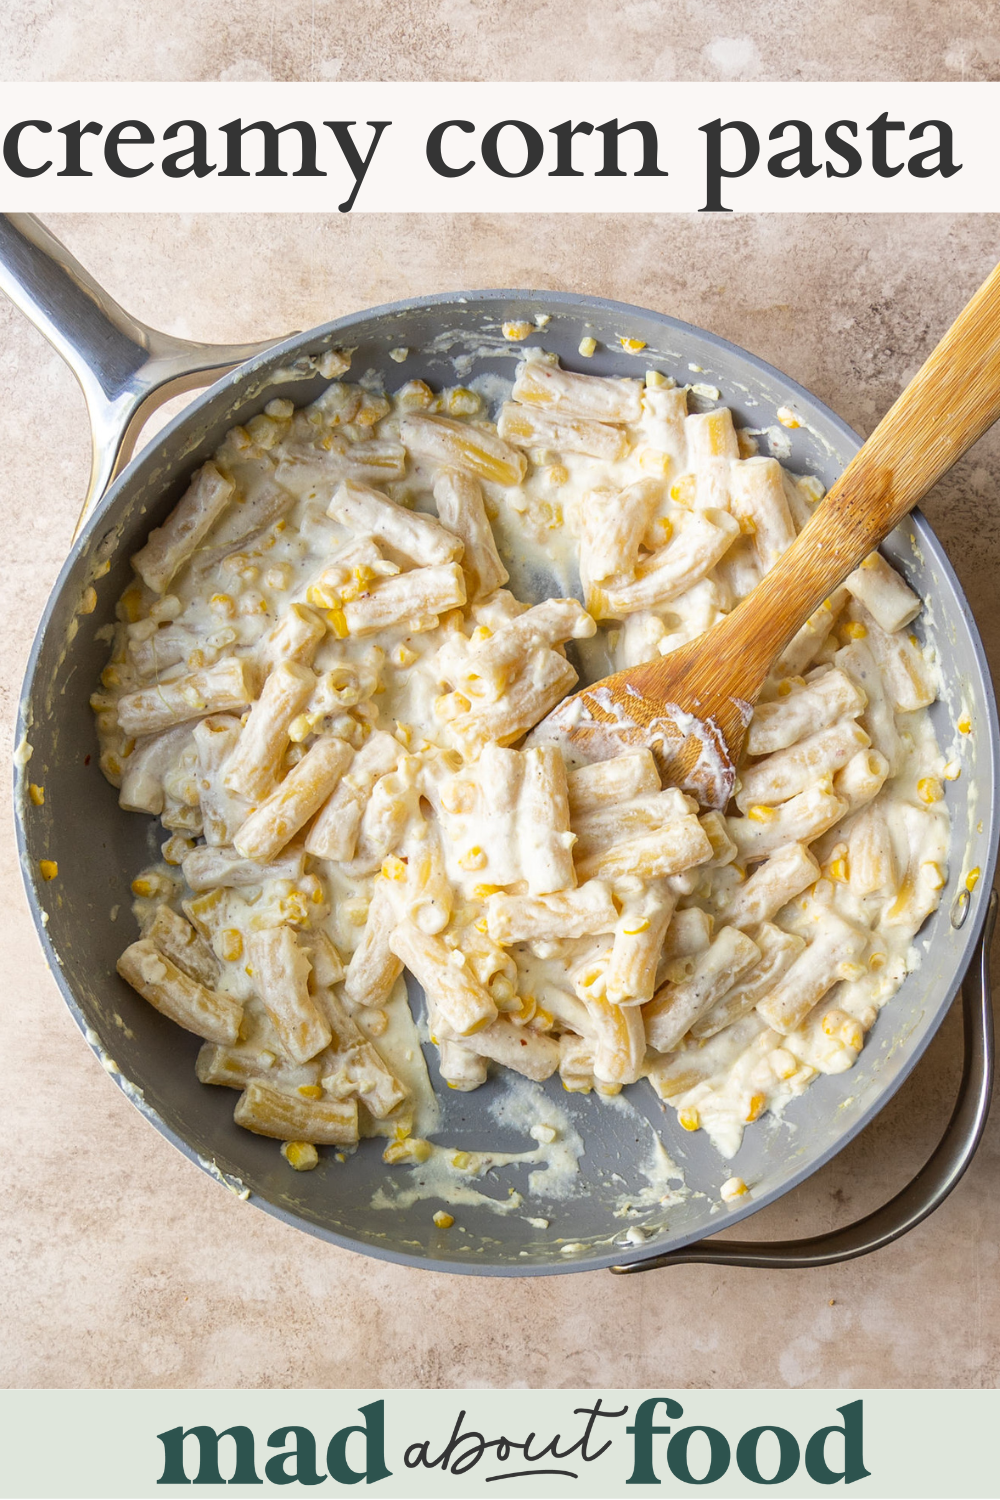 Image for pinning Creamy Corn Pasta recipe on Pinterest